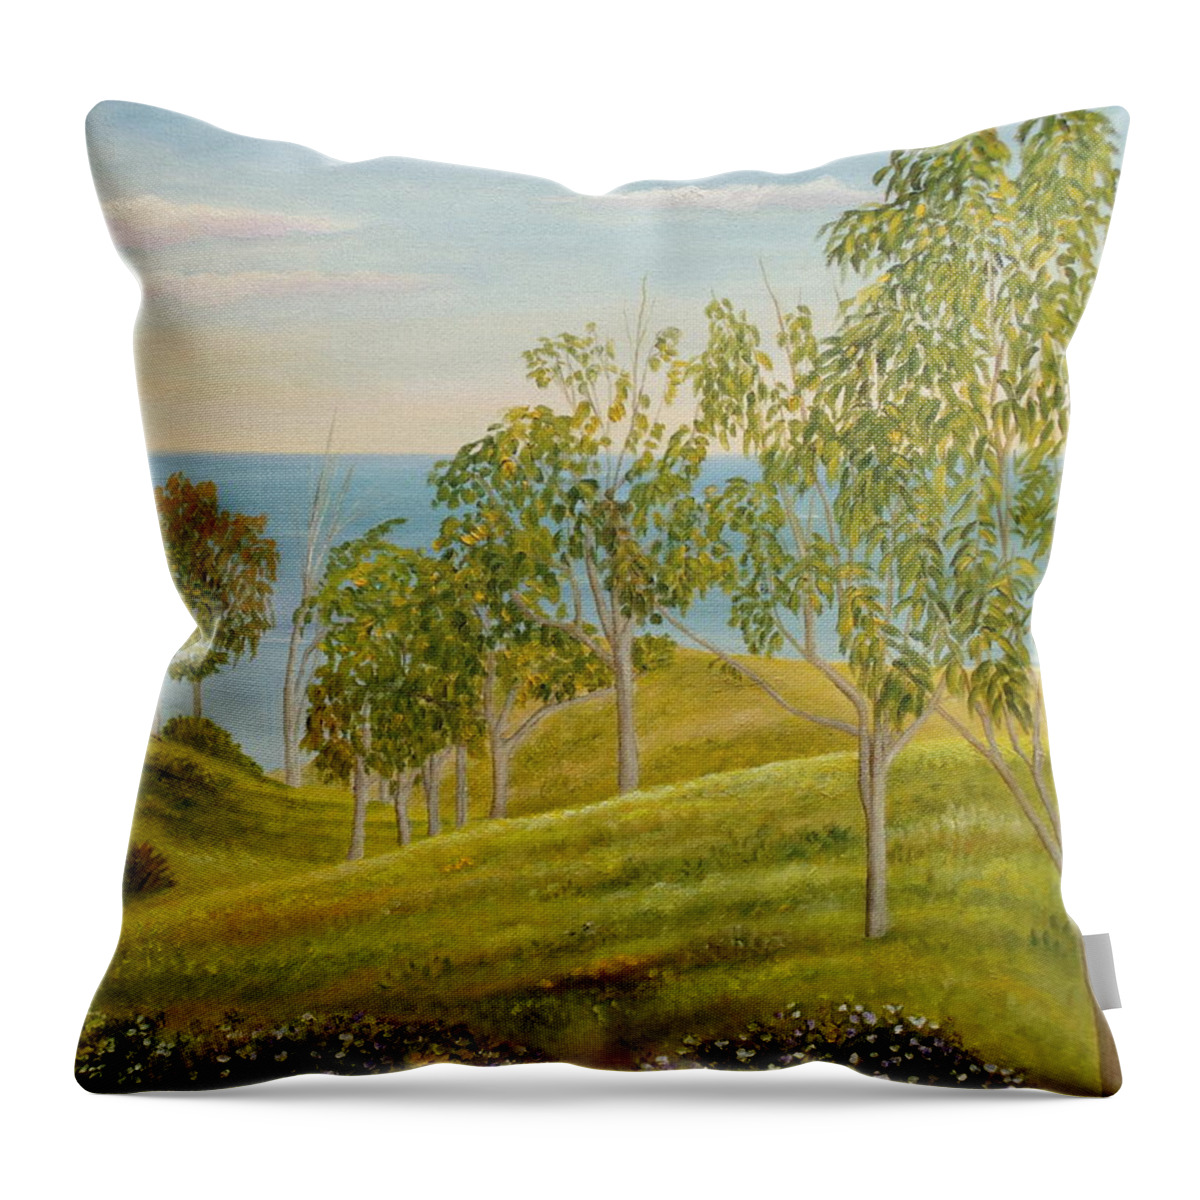 Eucalyptus Throw Pillow featuring the painting Beachhead Of Eucalyptuses by Angeles M Pomata